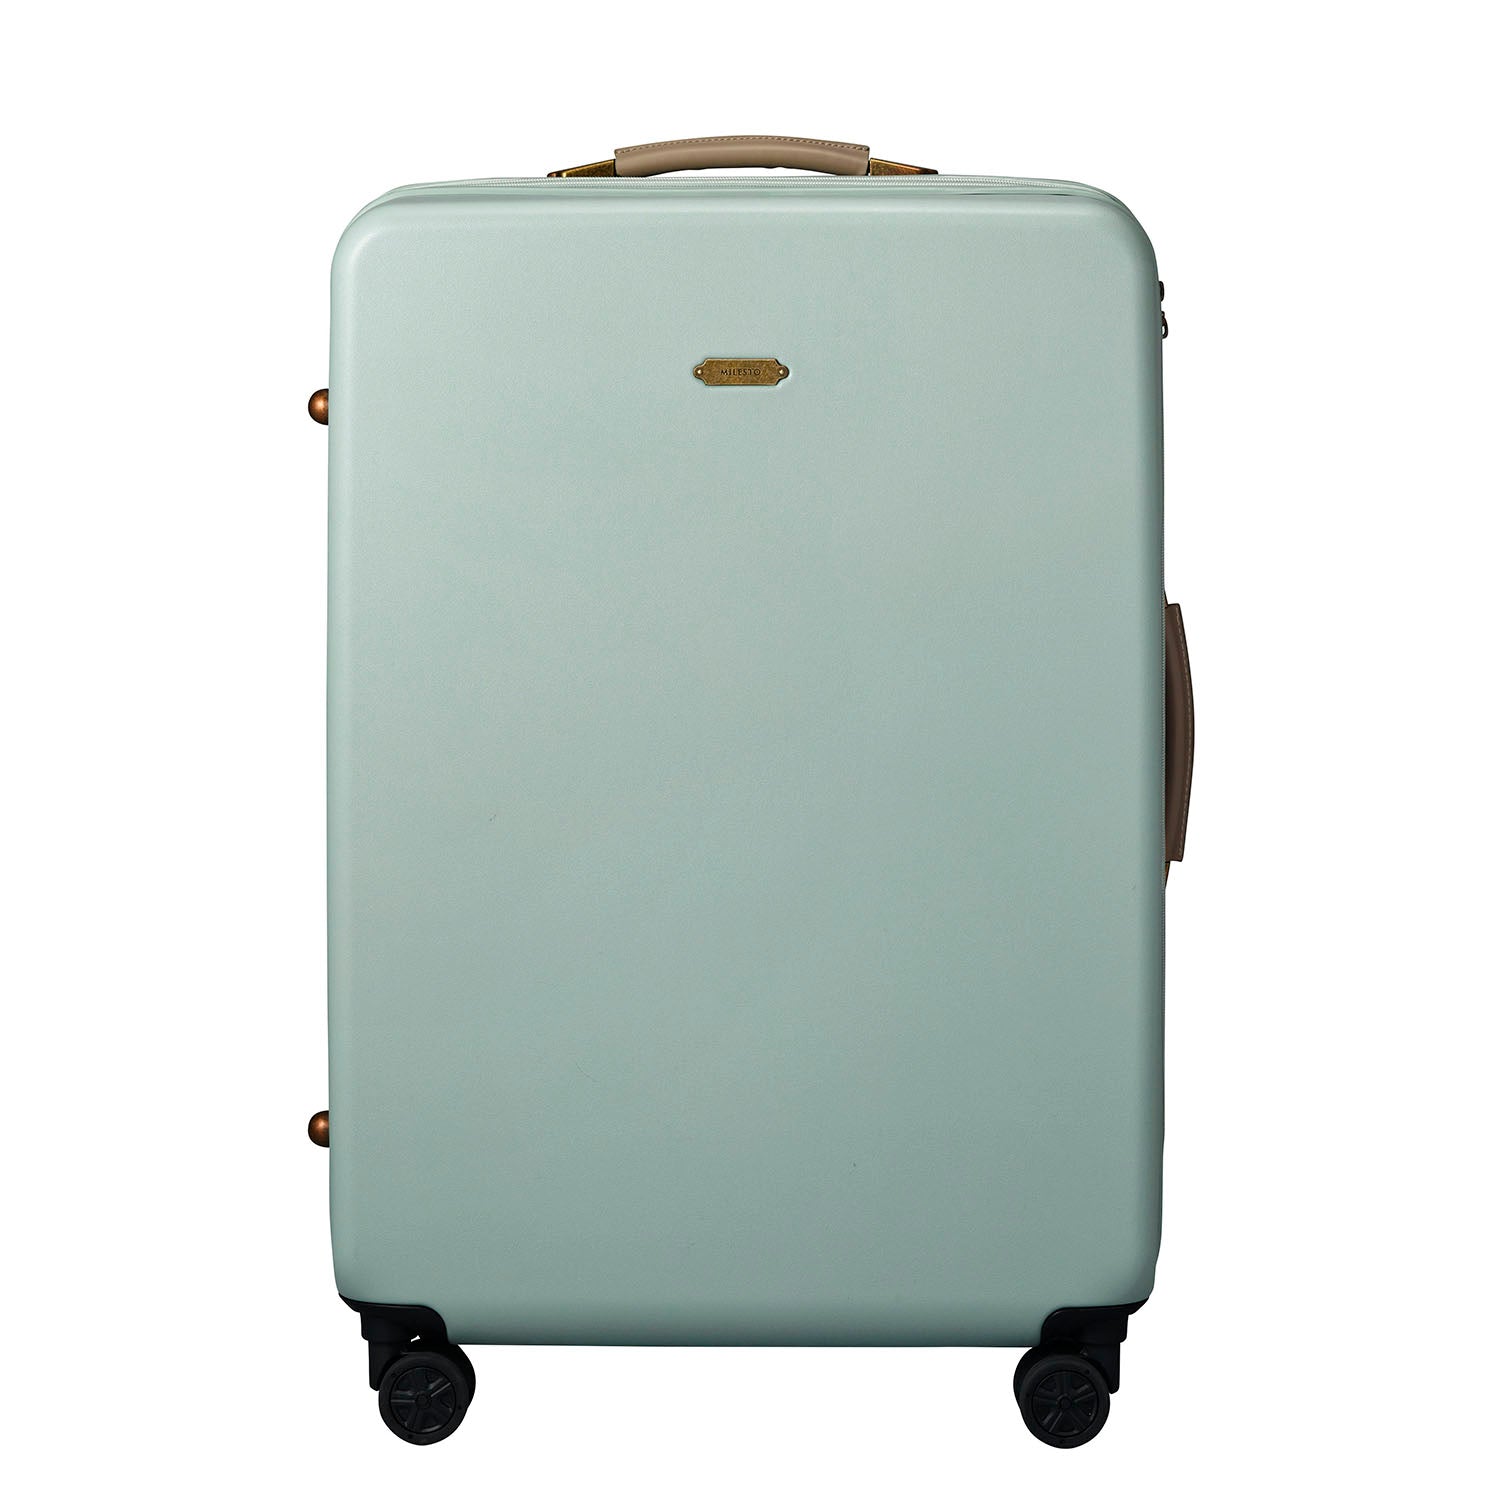 MILESTO UTILITY 經典行李箱 75L - 粉綠色 MLS657-PGR